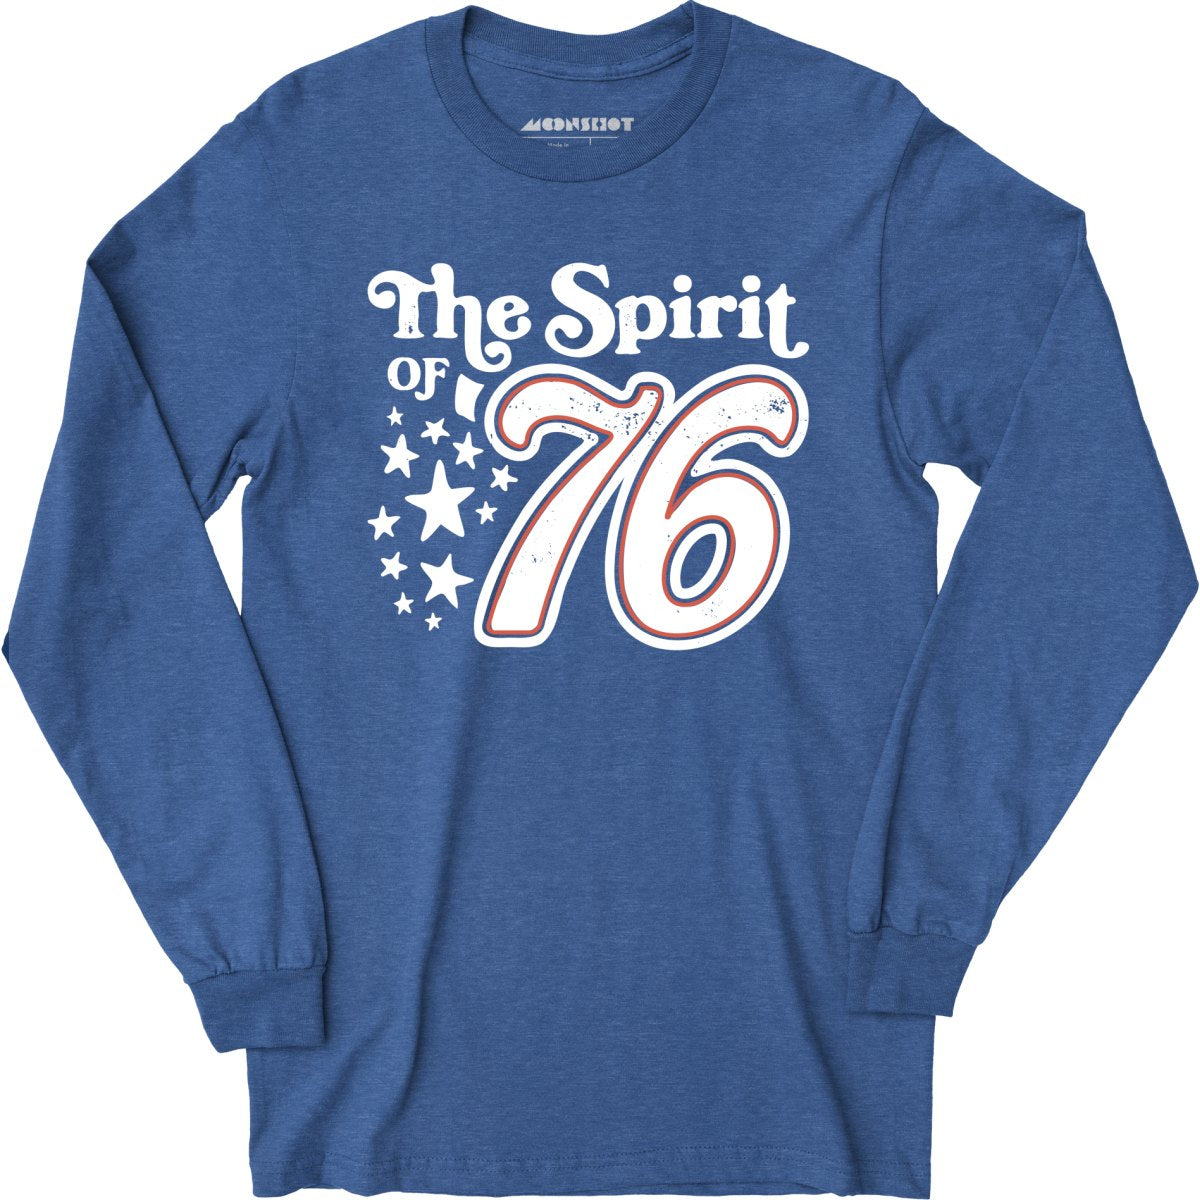 The Spirit of '76 - Long Sleeve T-Shirt